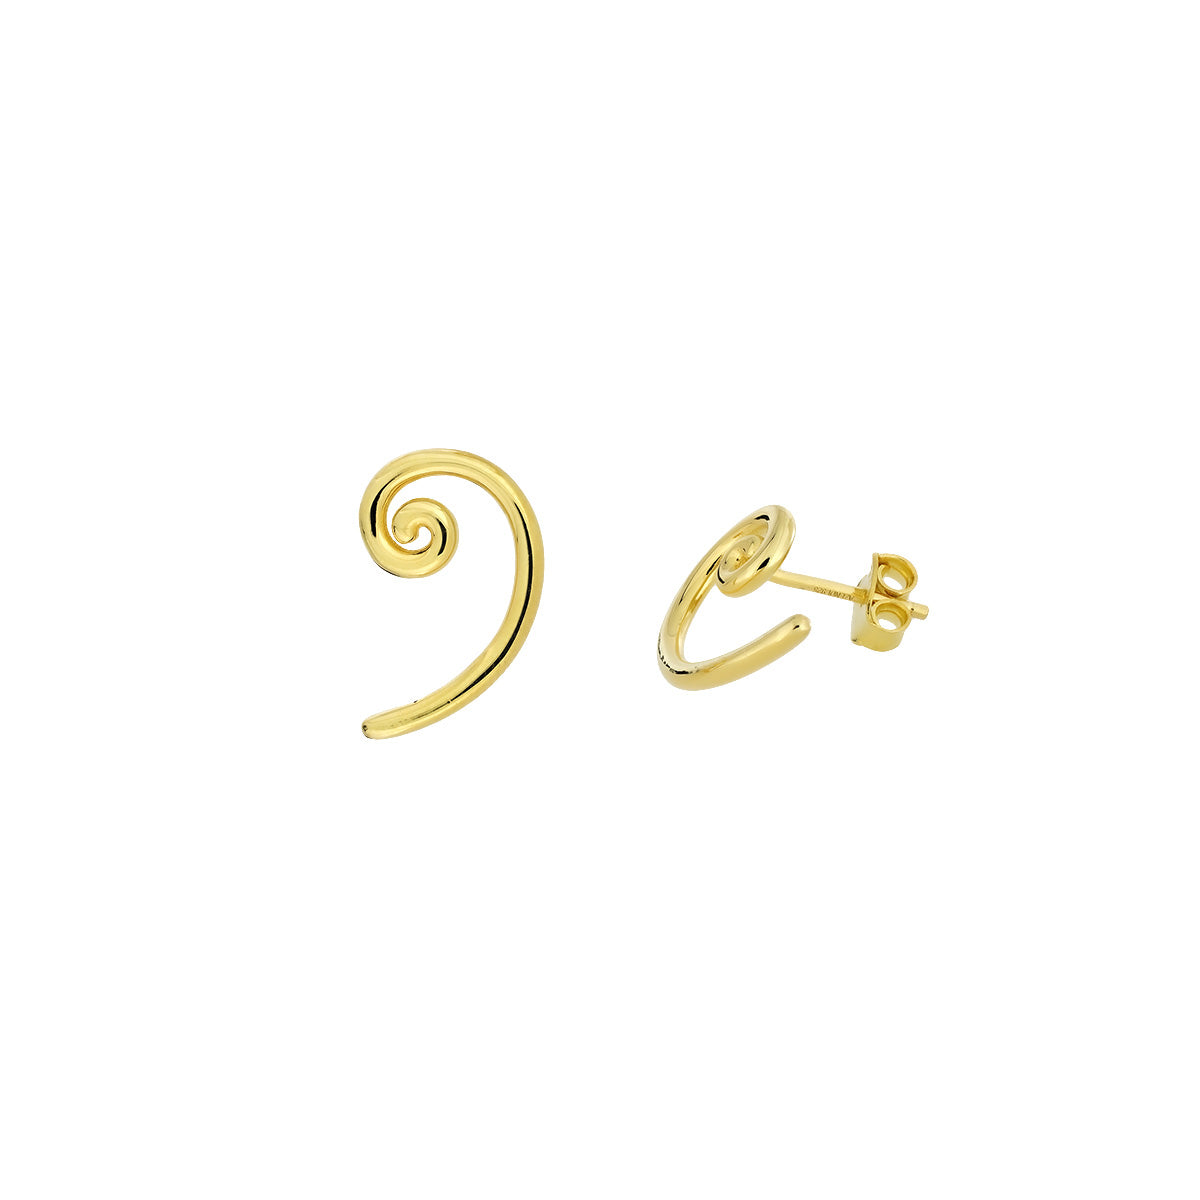 Spiral Stud Earrings in Yellow Gold Vermeil